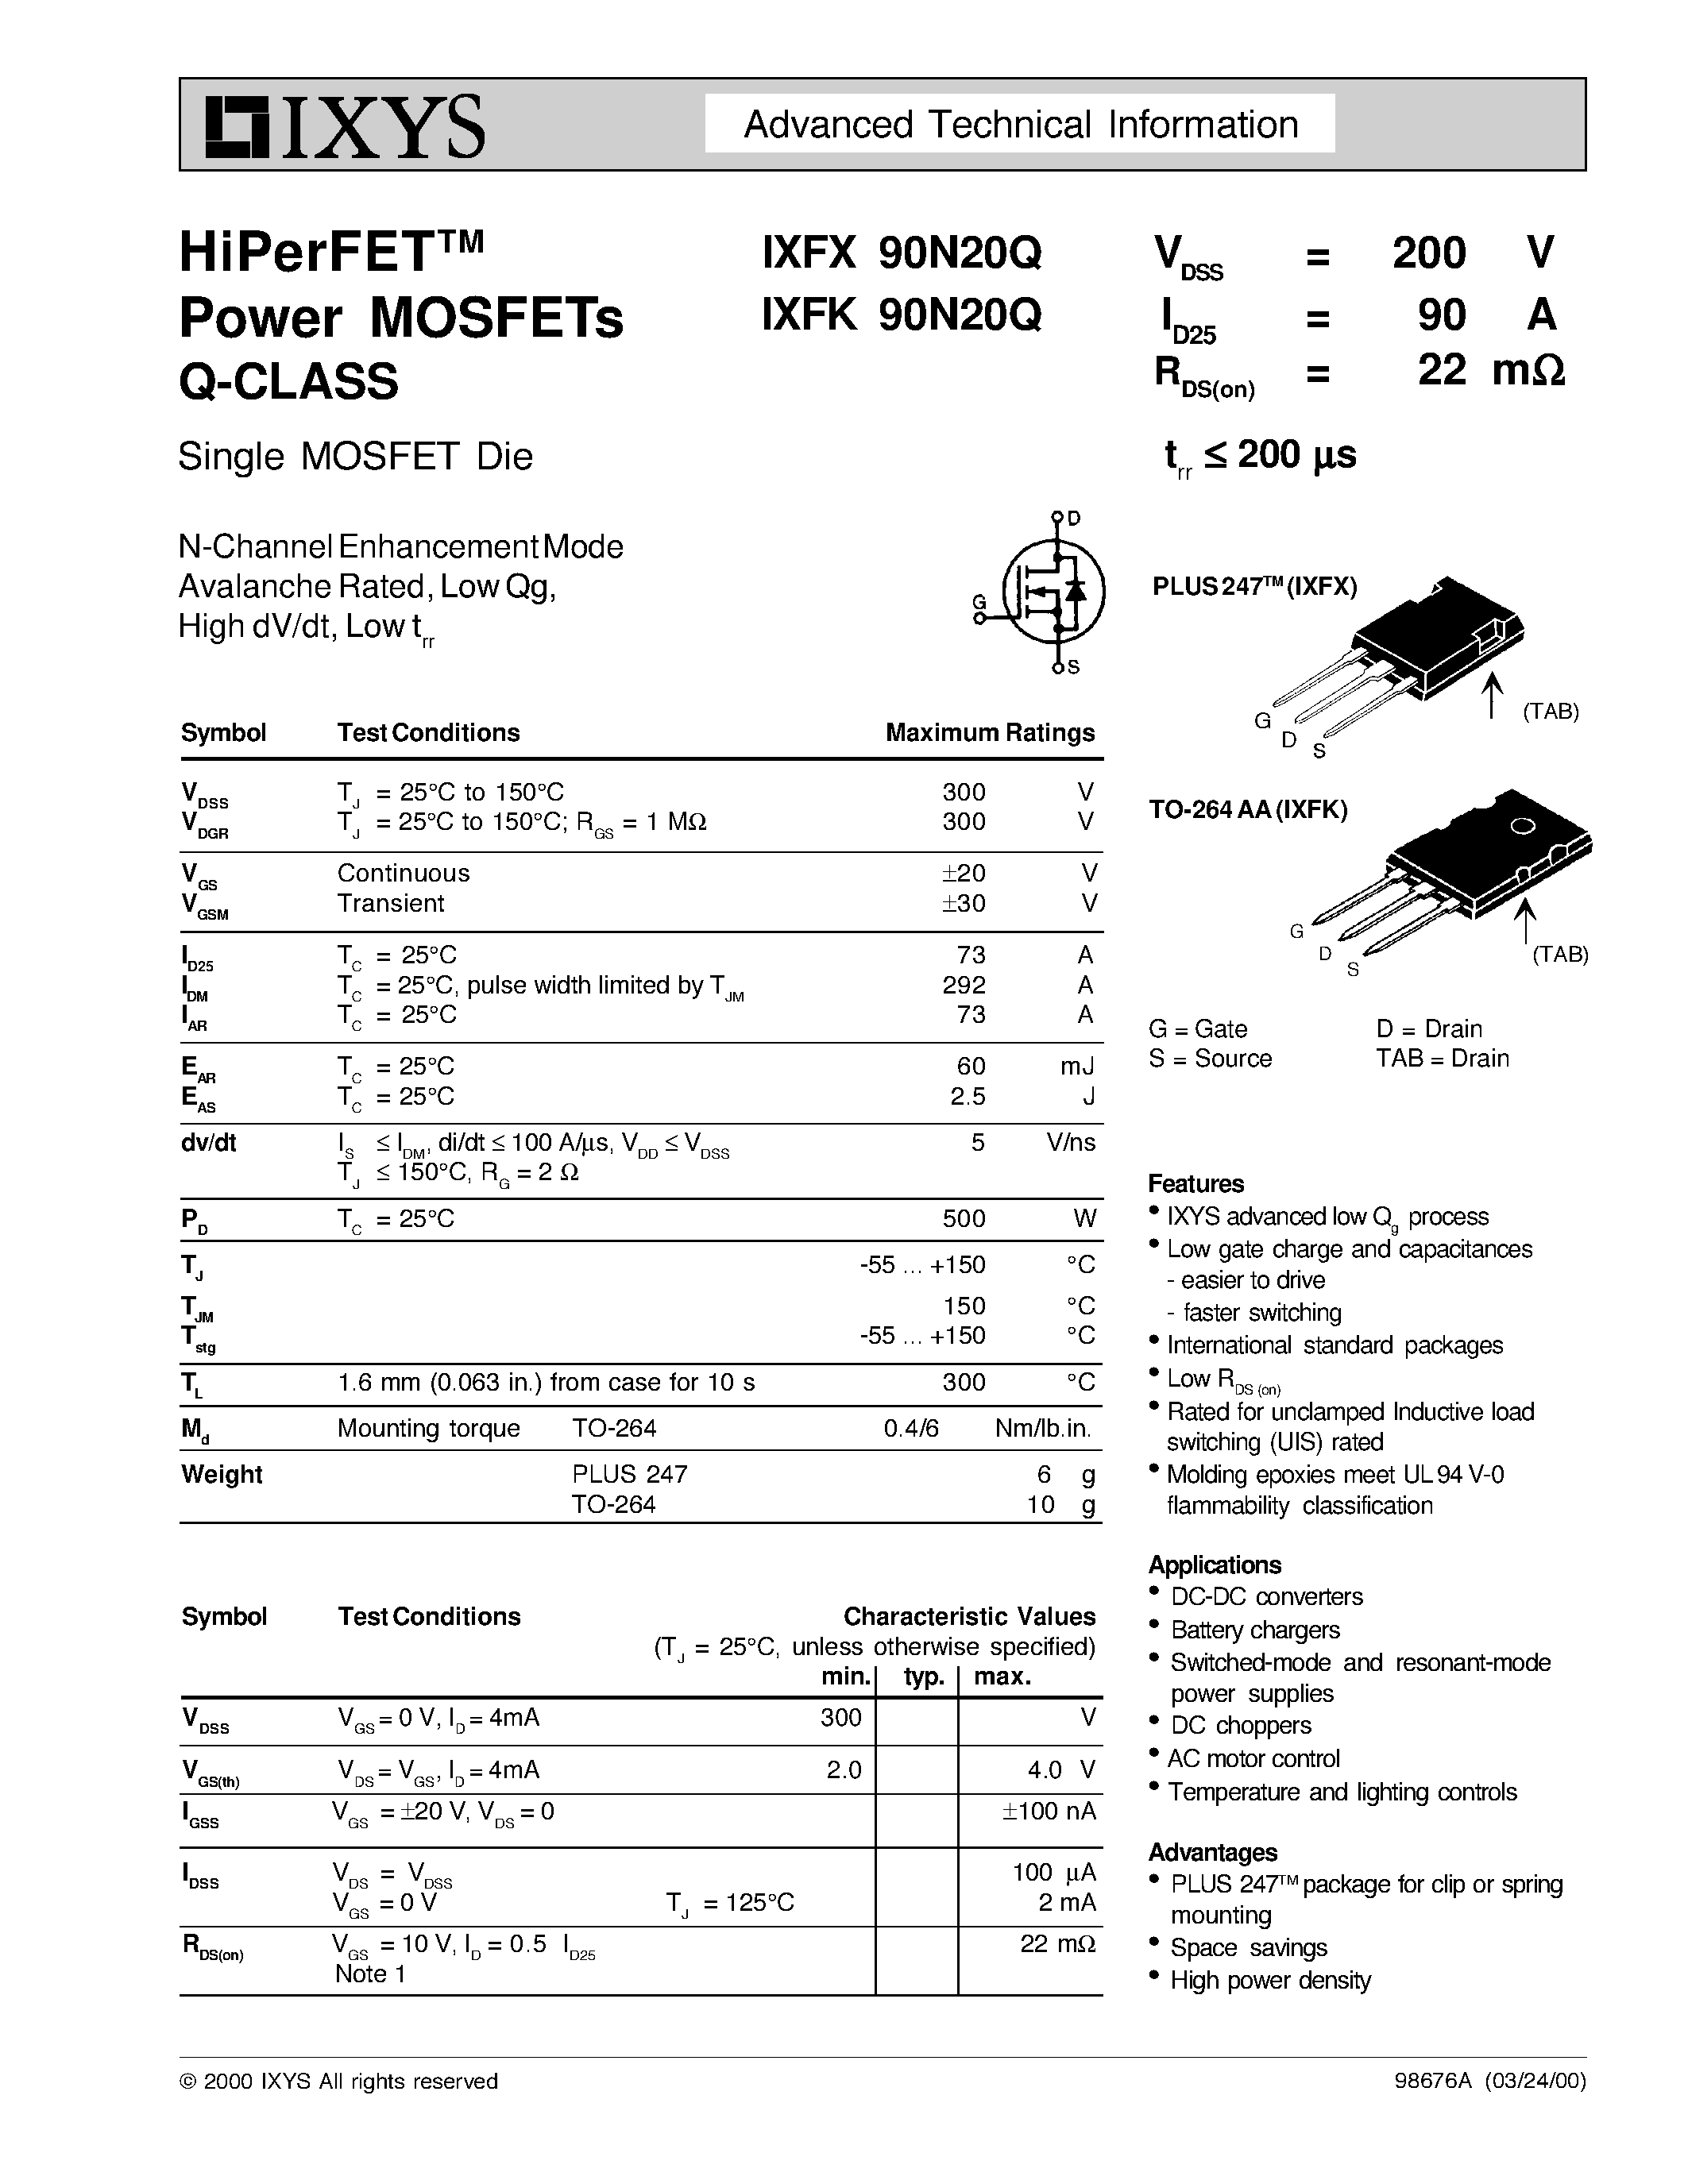 Datasheet IXFX90N20Q - HiPerFETTM Power MOSFETs Q-CLASS page 1